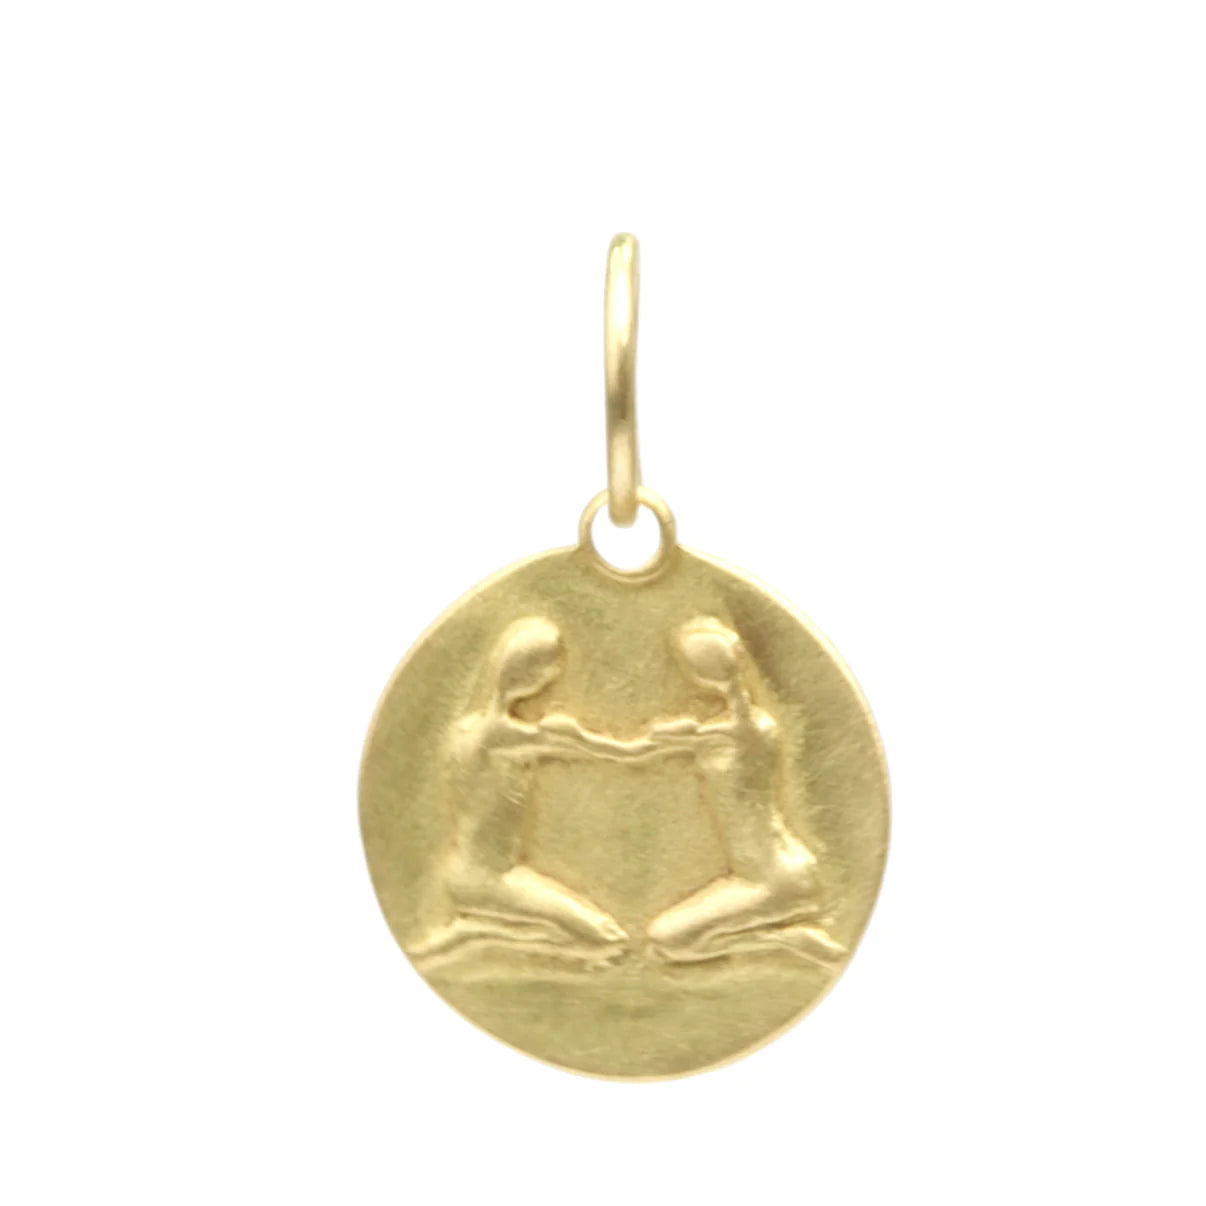 zodiac medal pendant necklace - gemini